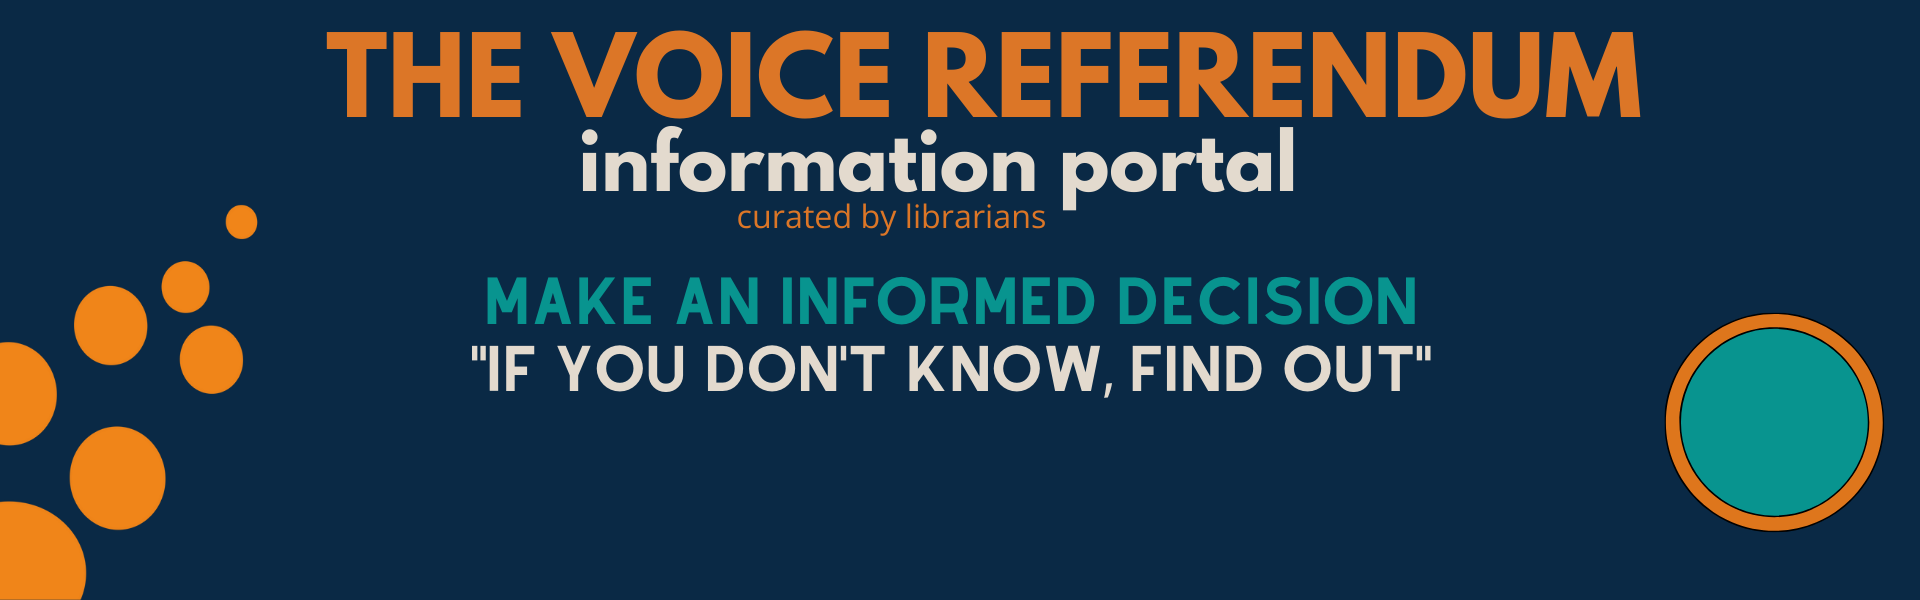 Information portal for the Voice Referendum